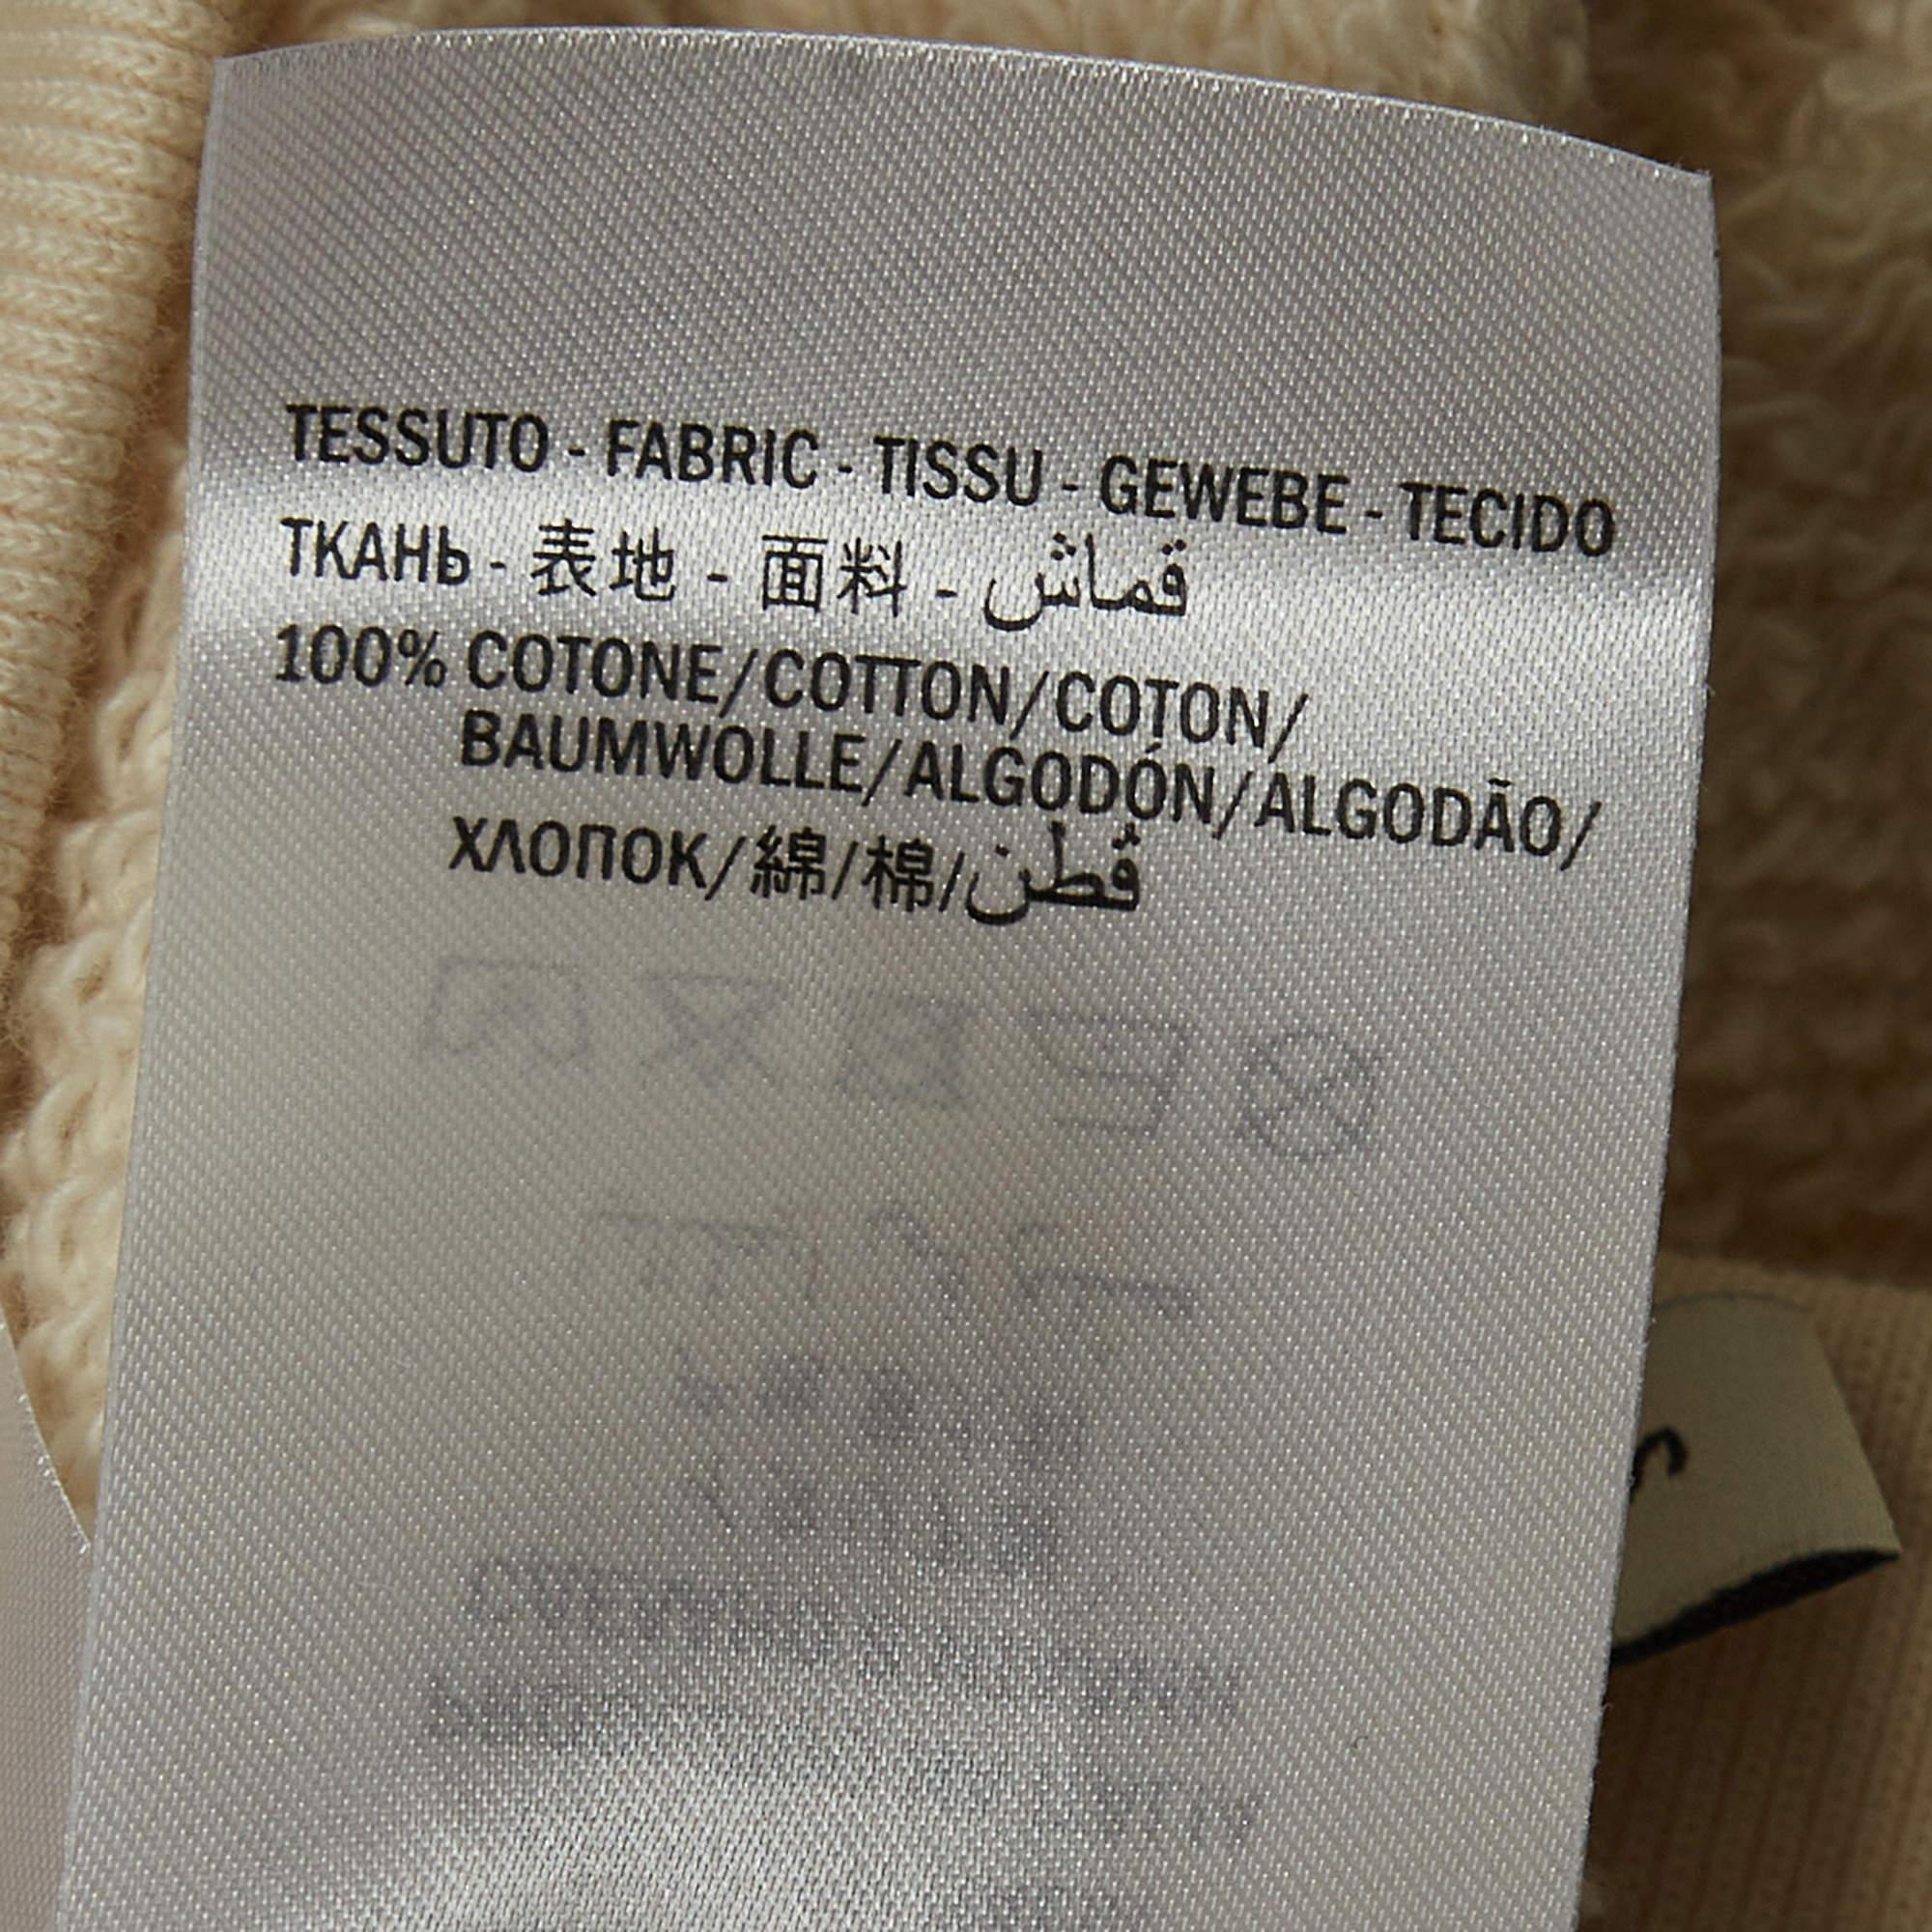 Gucci Off-White Printed Cotton Zipper Detail Sweatshirt S In Excellent Condition For Sale In Dubai, Al Qouz 2